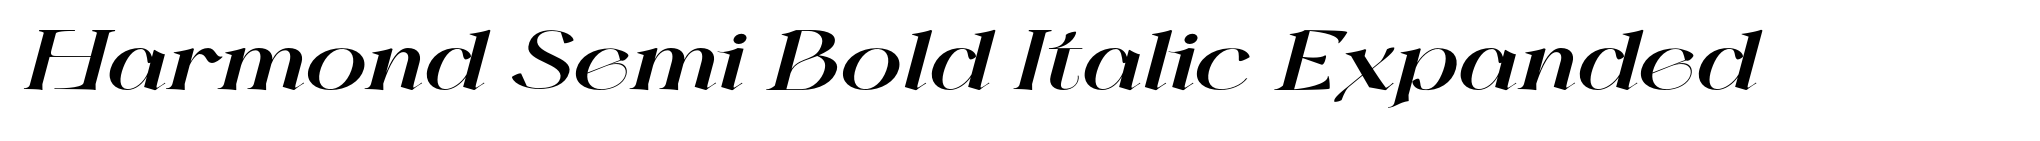 Harmond Semi Bold Italic Expanded image